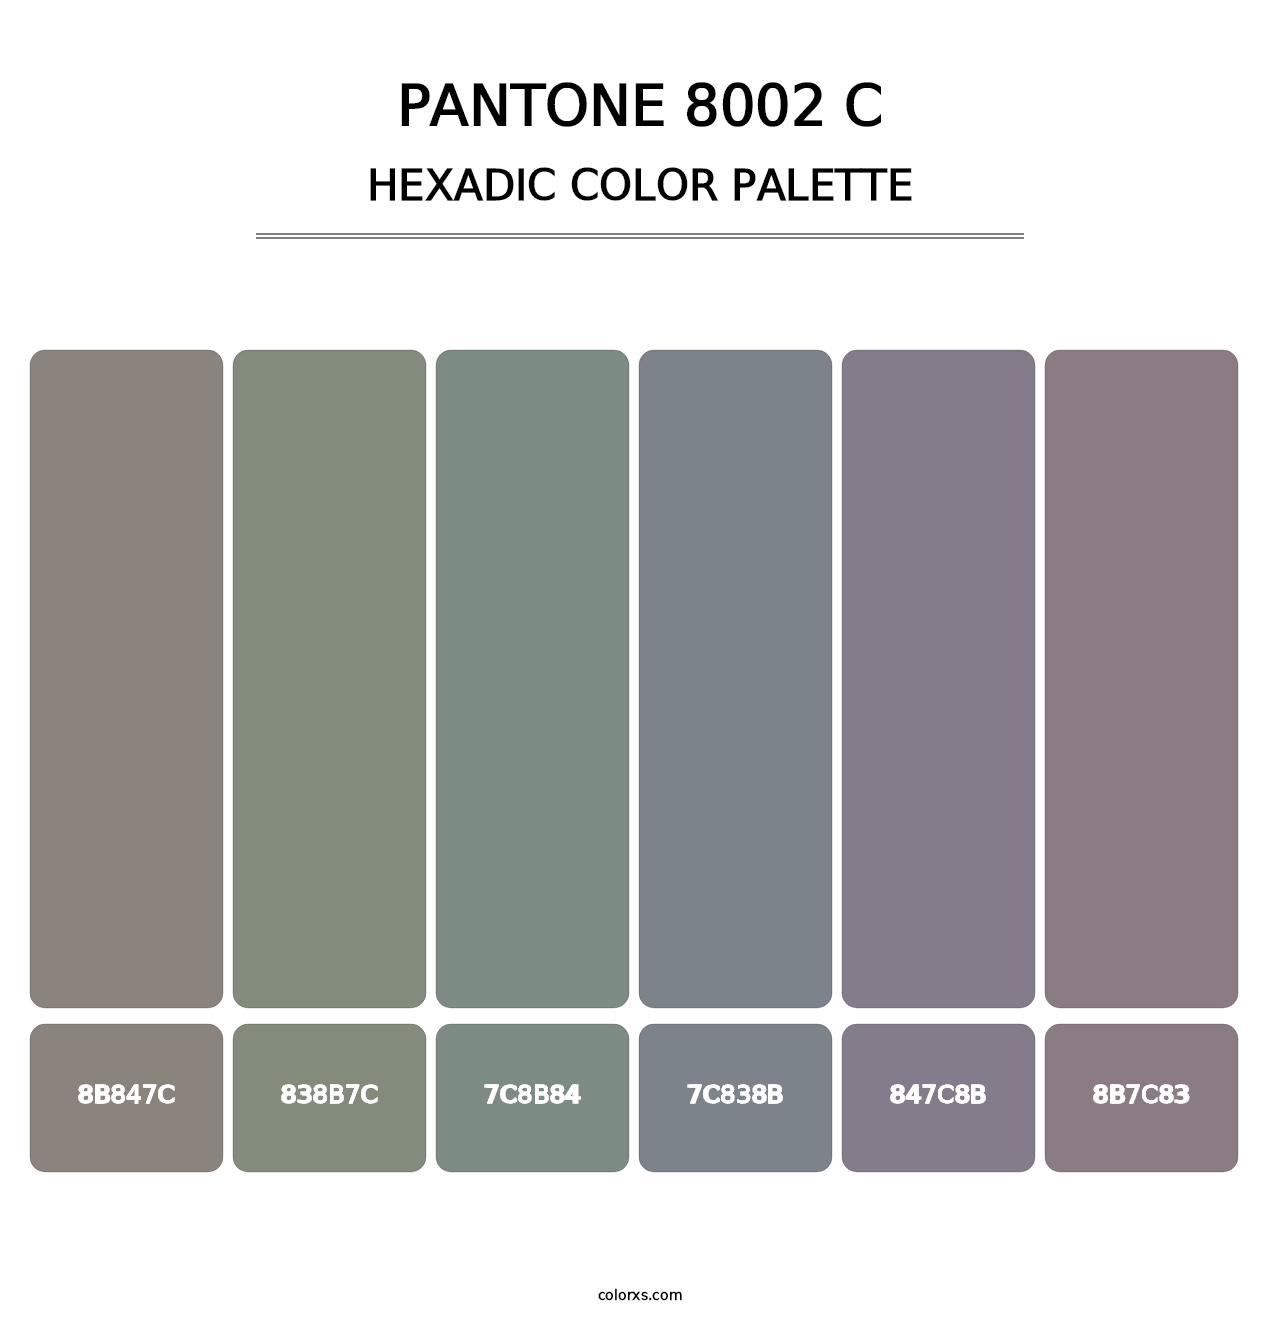 PANTONE 8002 C - Hexadic Color Palette